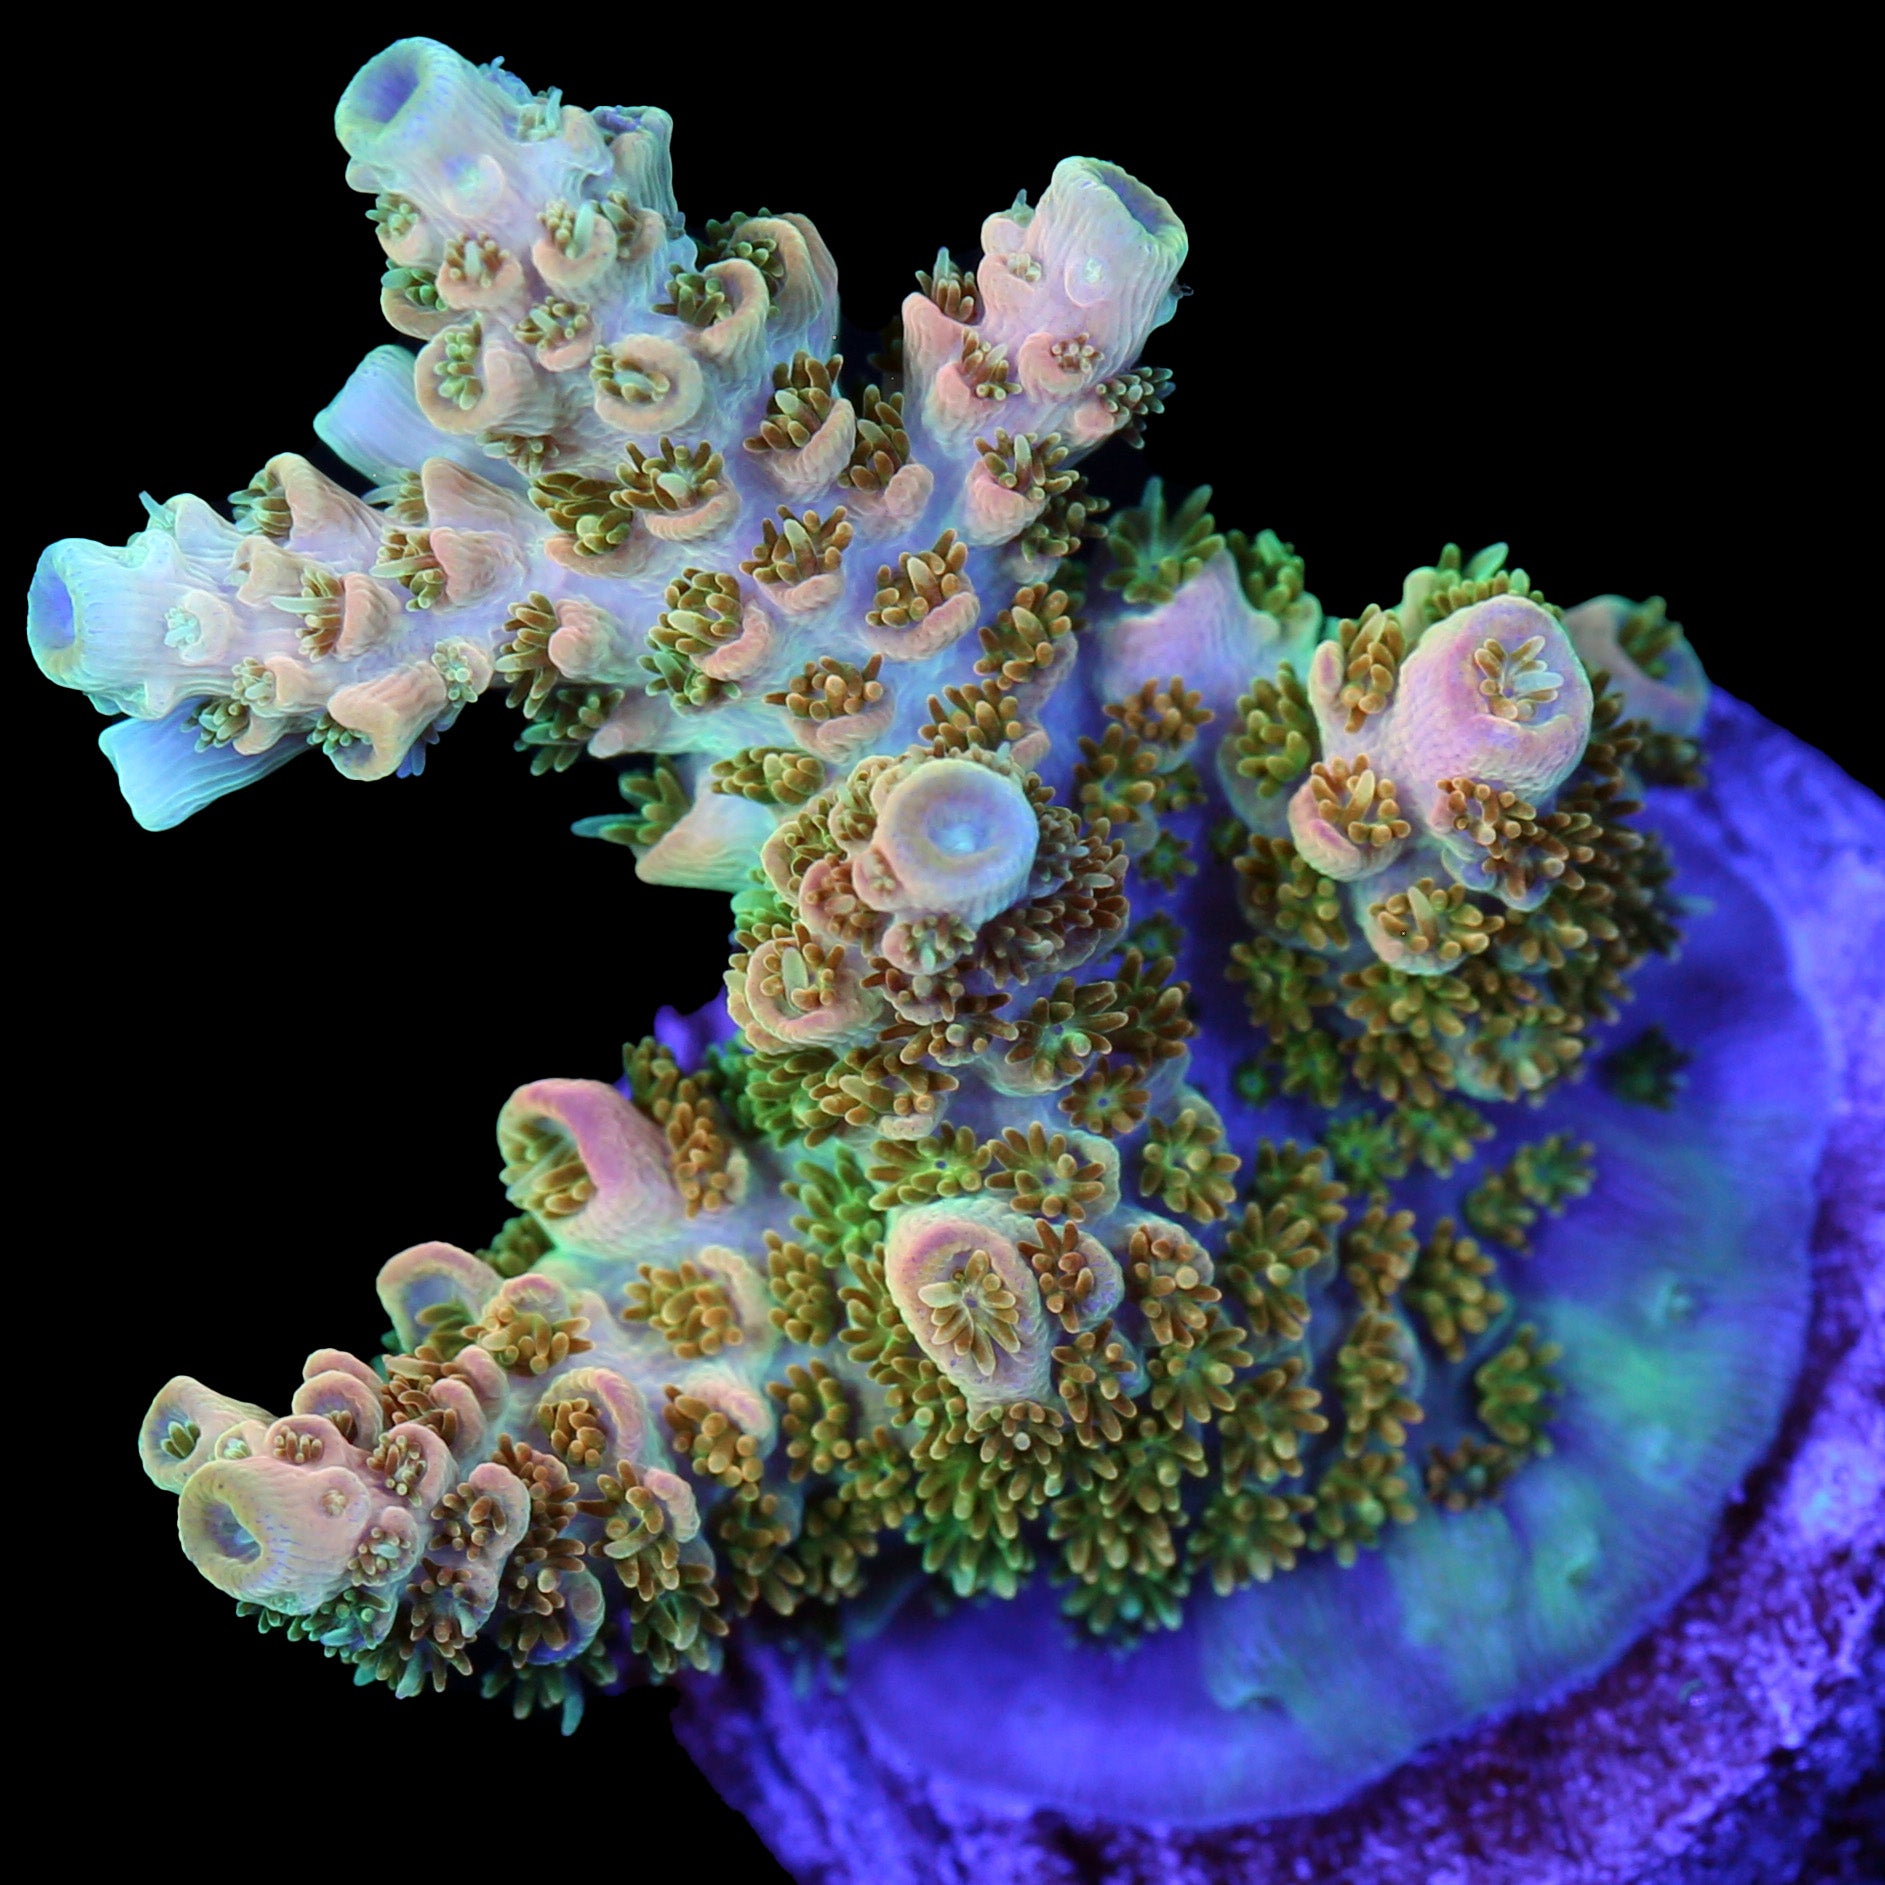 4+ Free Acropora & Coral Images - Pixabay